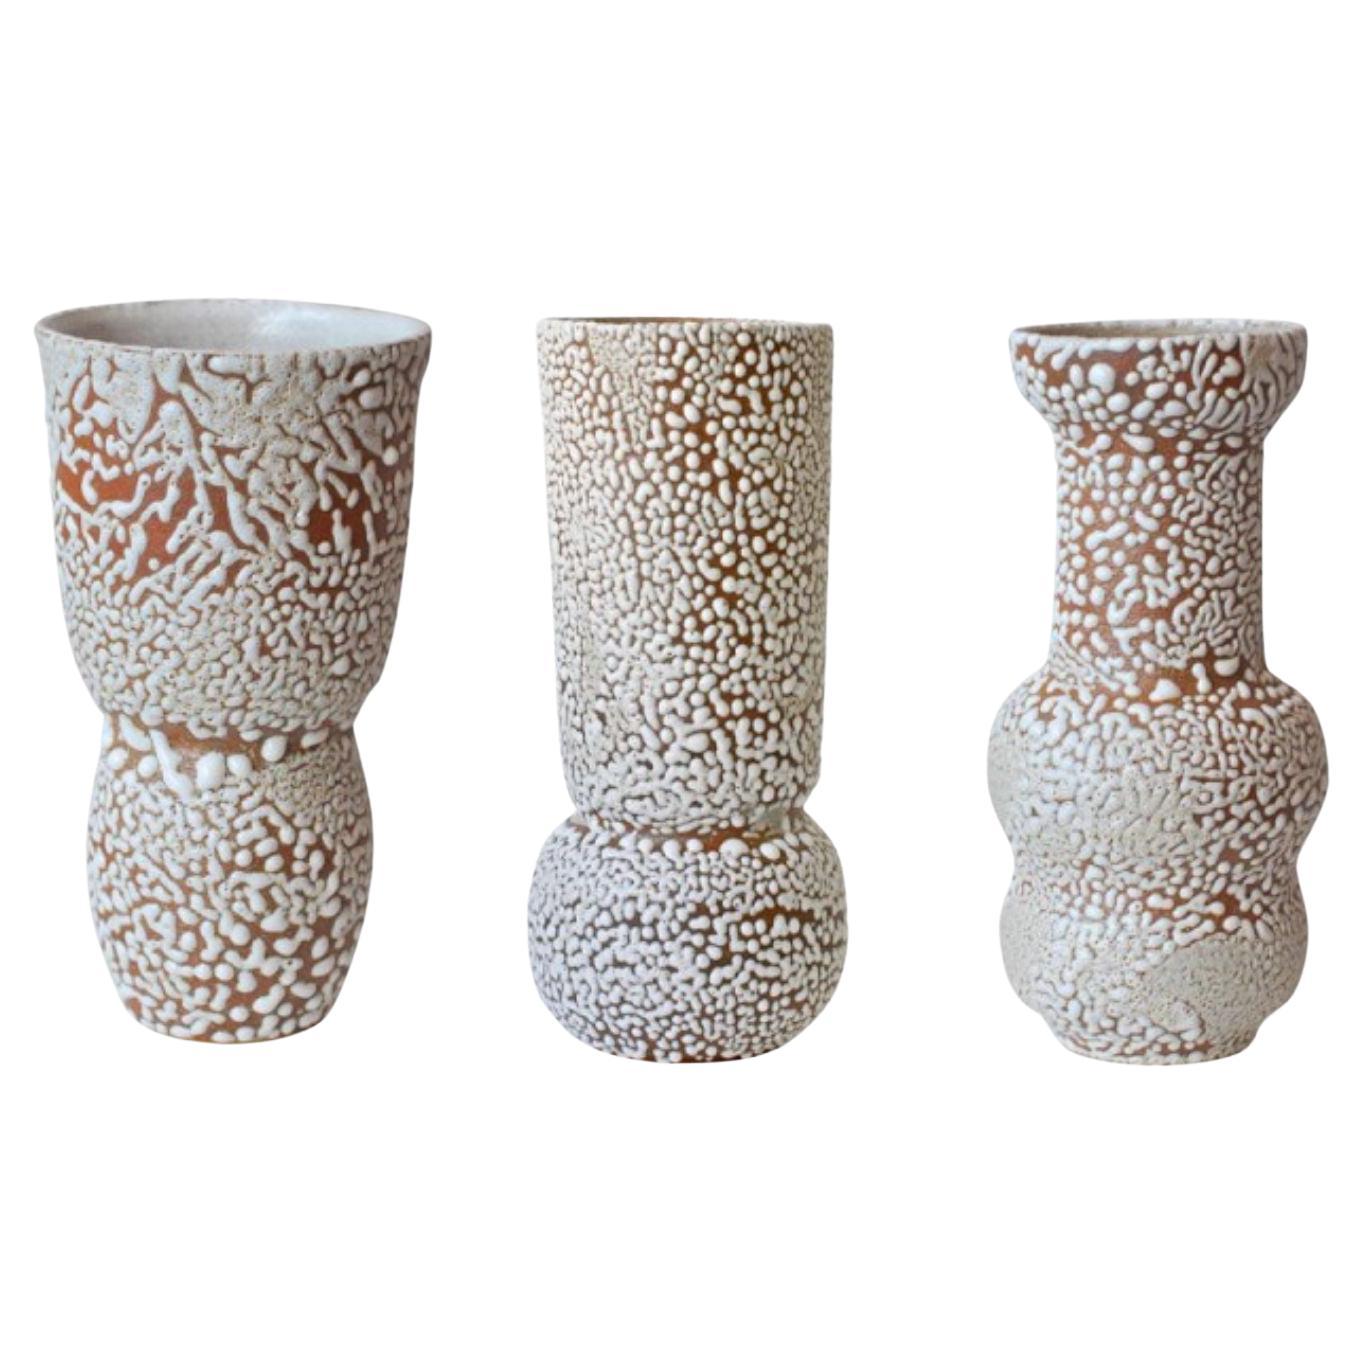 Set of 3 White Stoneware Vases C-019, C0-15, C-018 by Moïo Studio For Sale